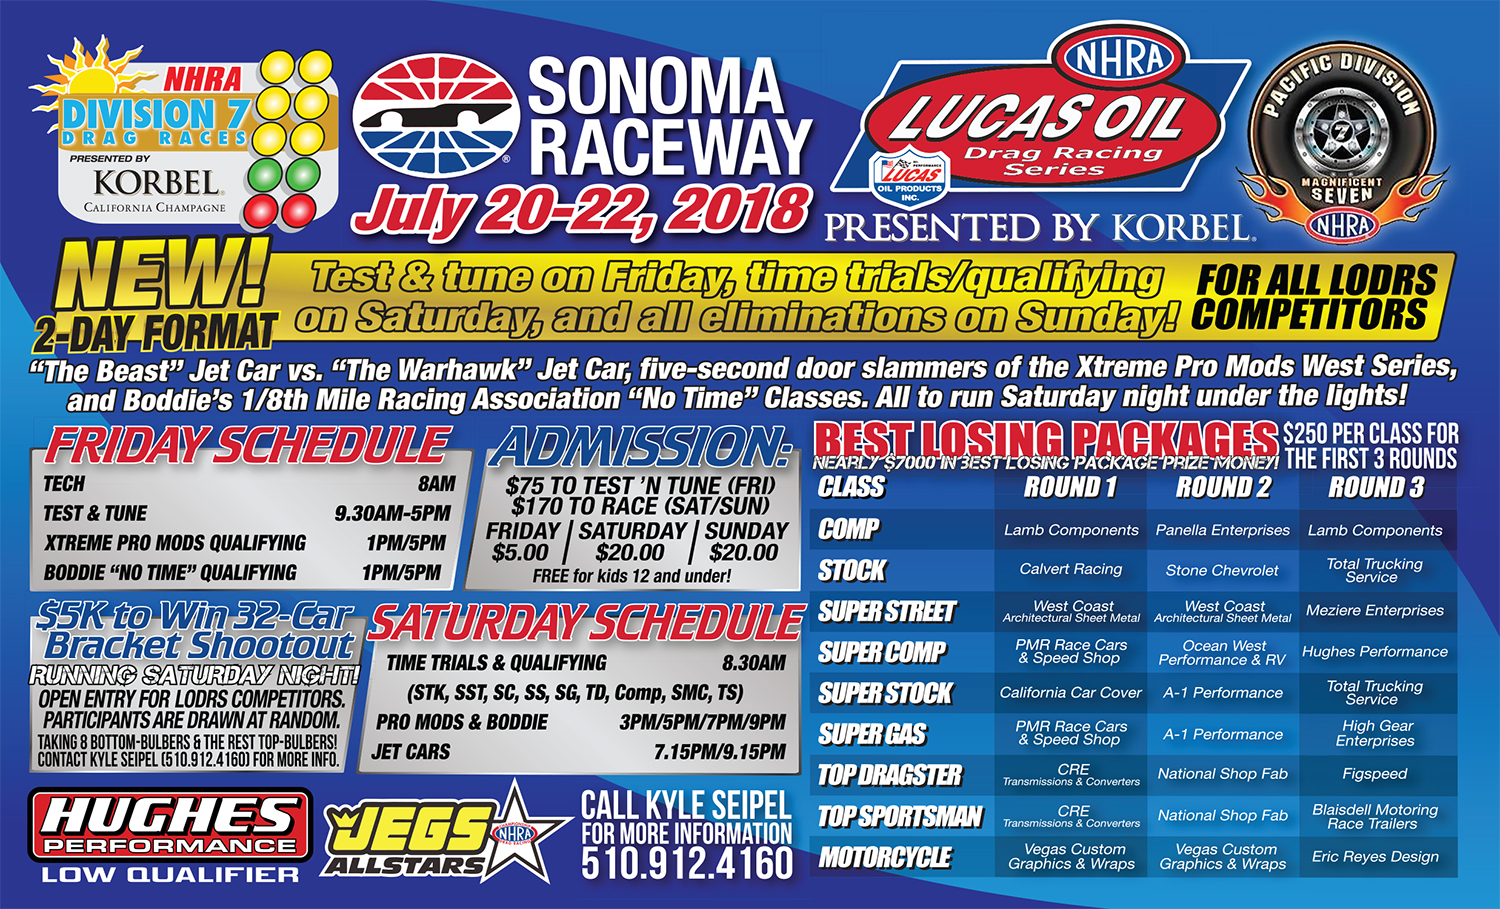 LODRS Sonoma Raceway | NHRA